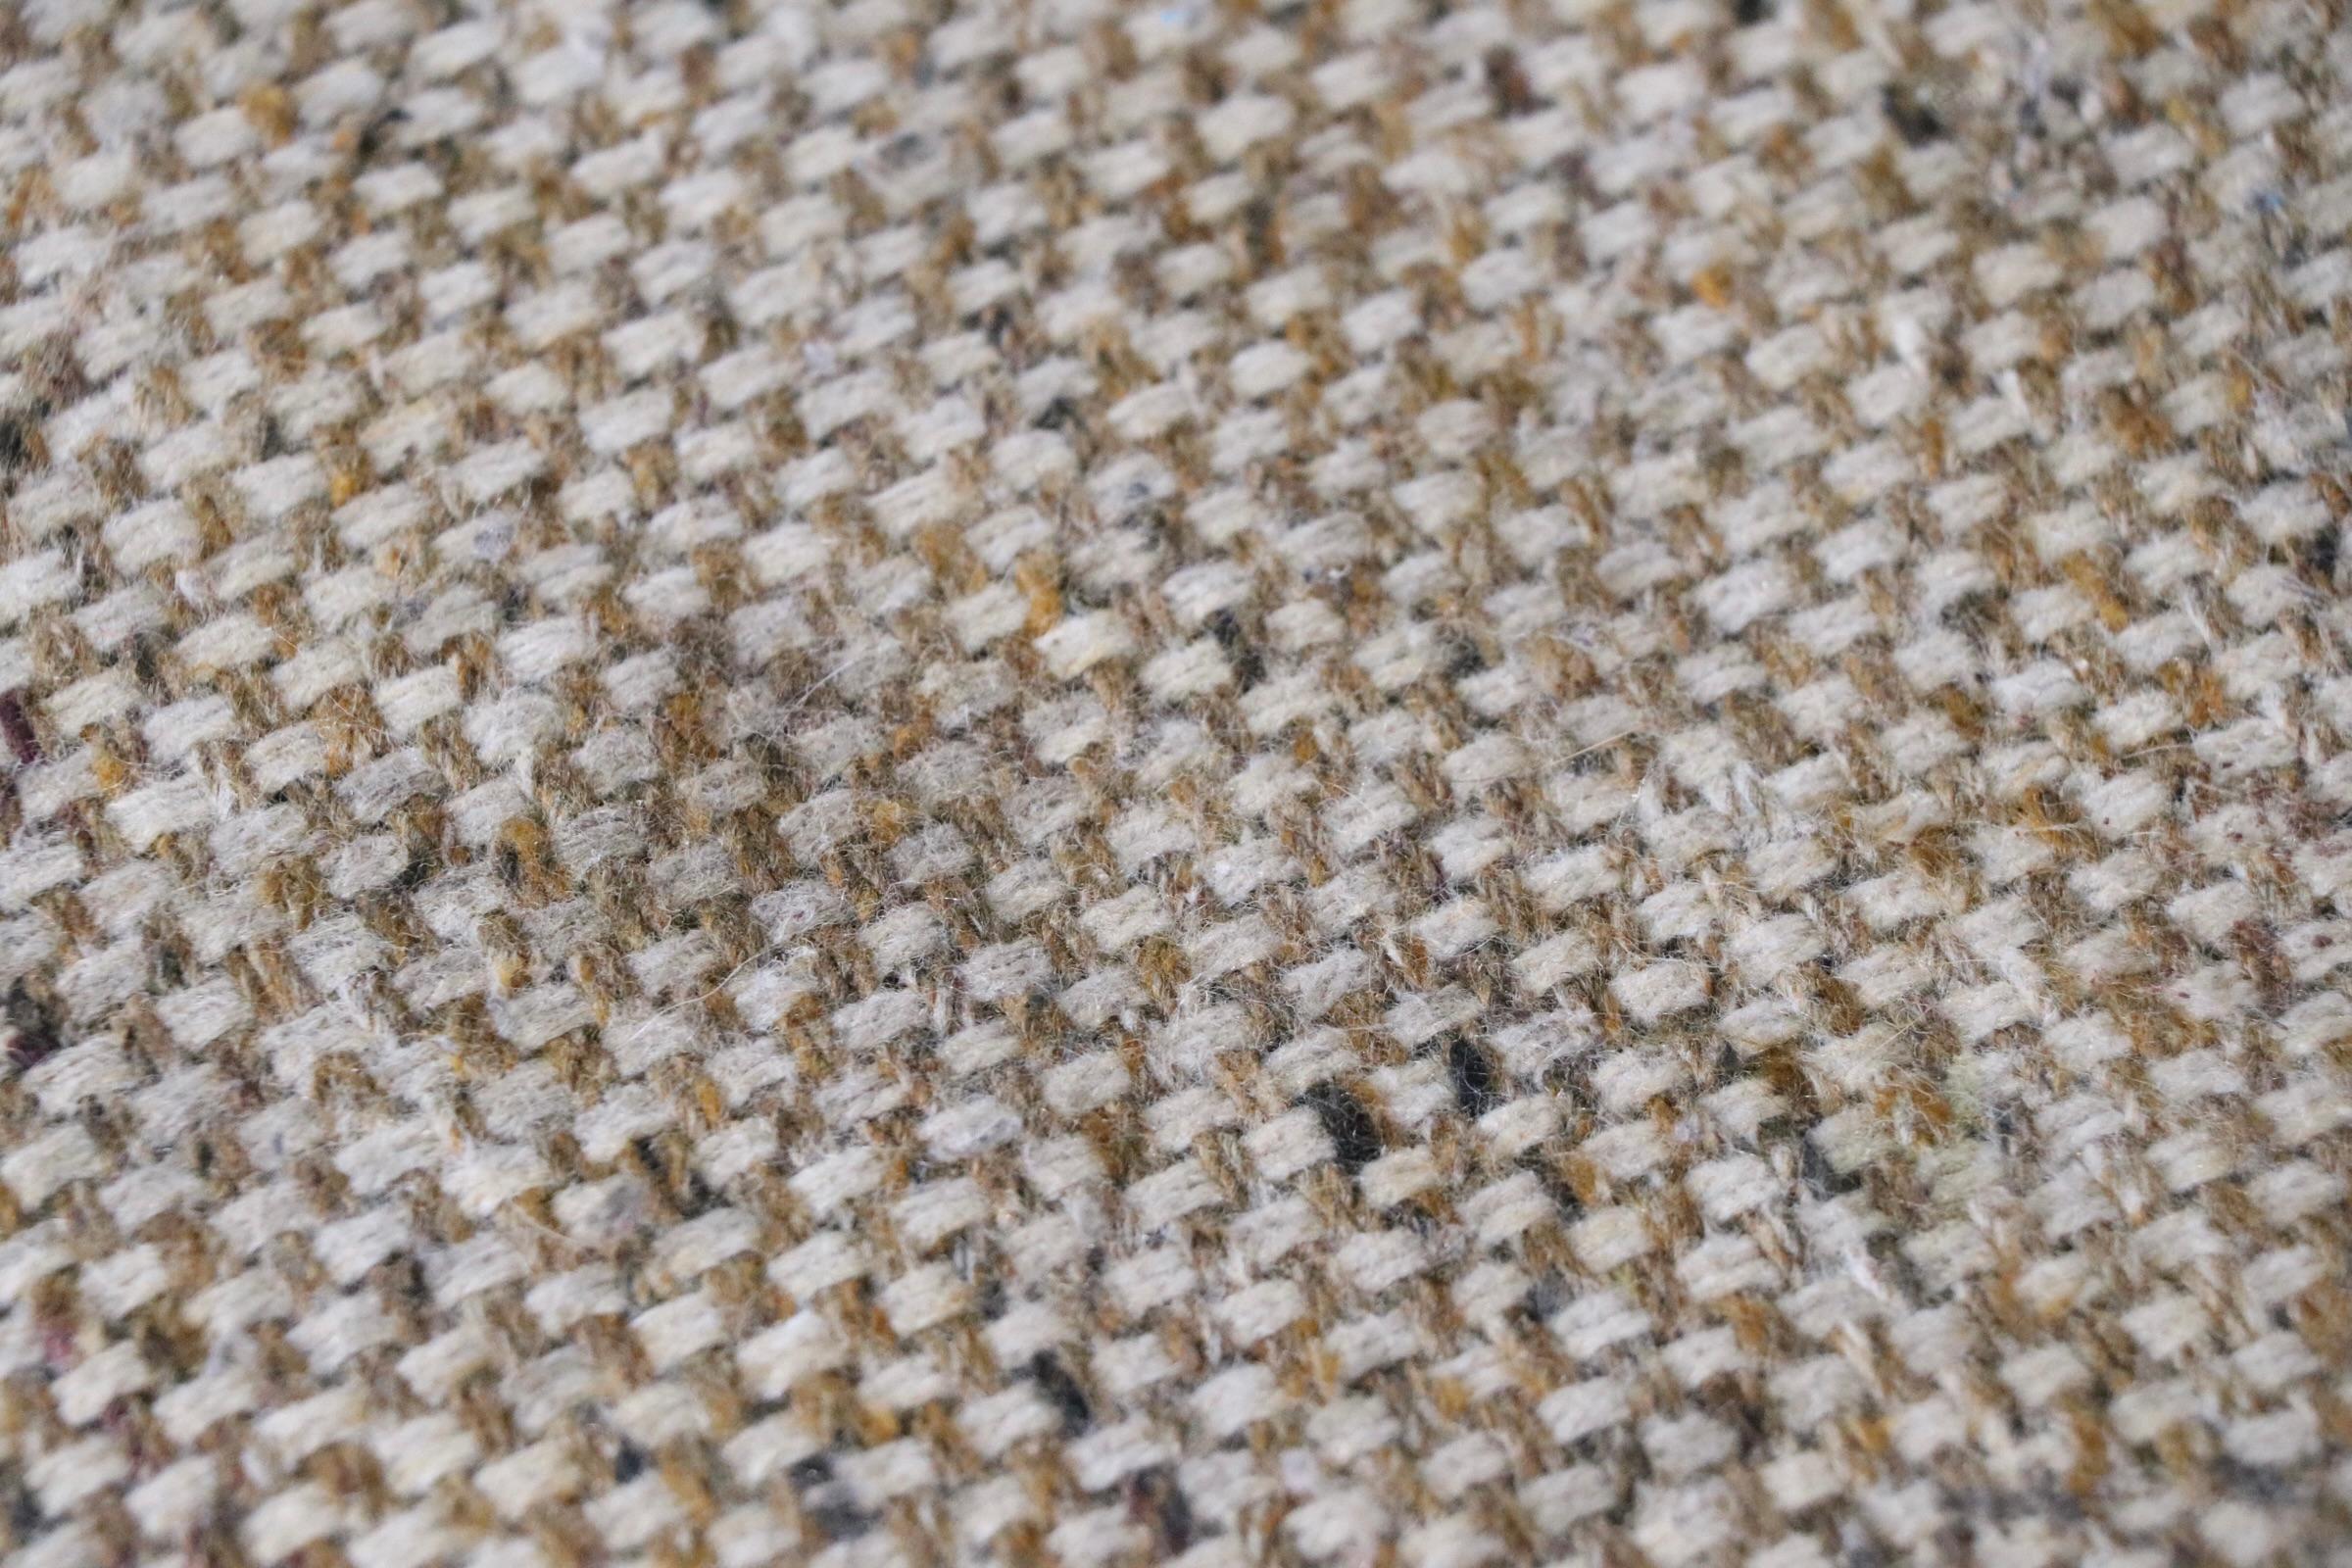 Mod Pod Sofa by Overman in Original Tweed Fabric, circa 1960s - 1970s 1